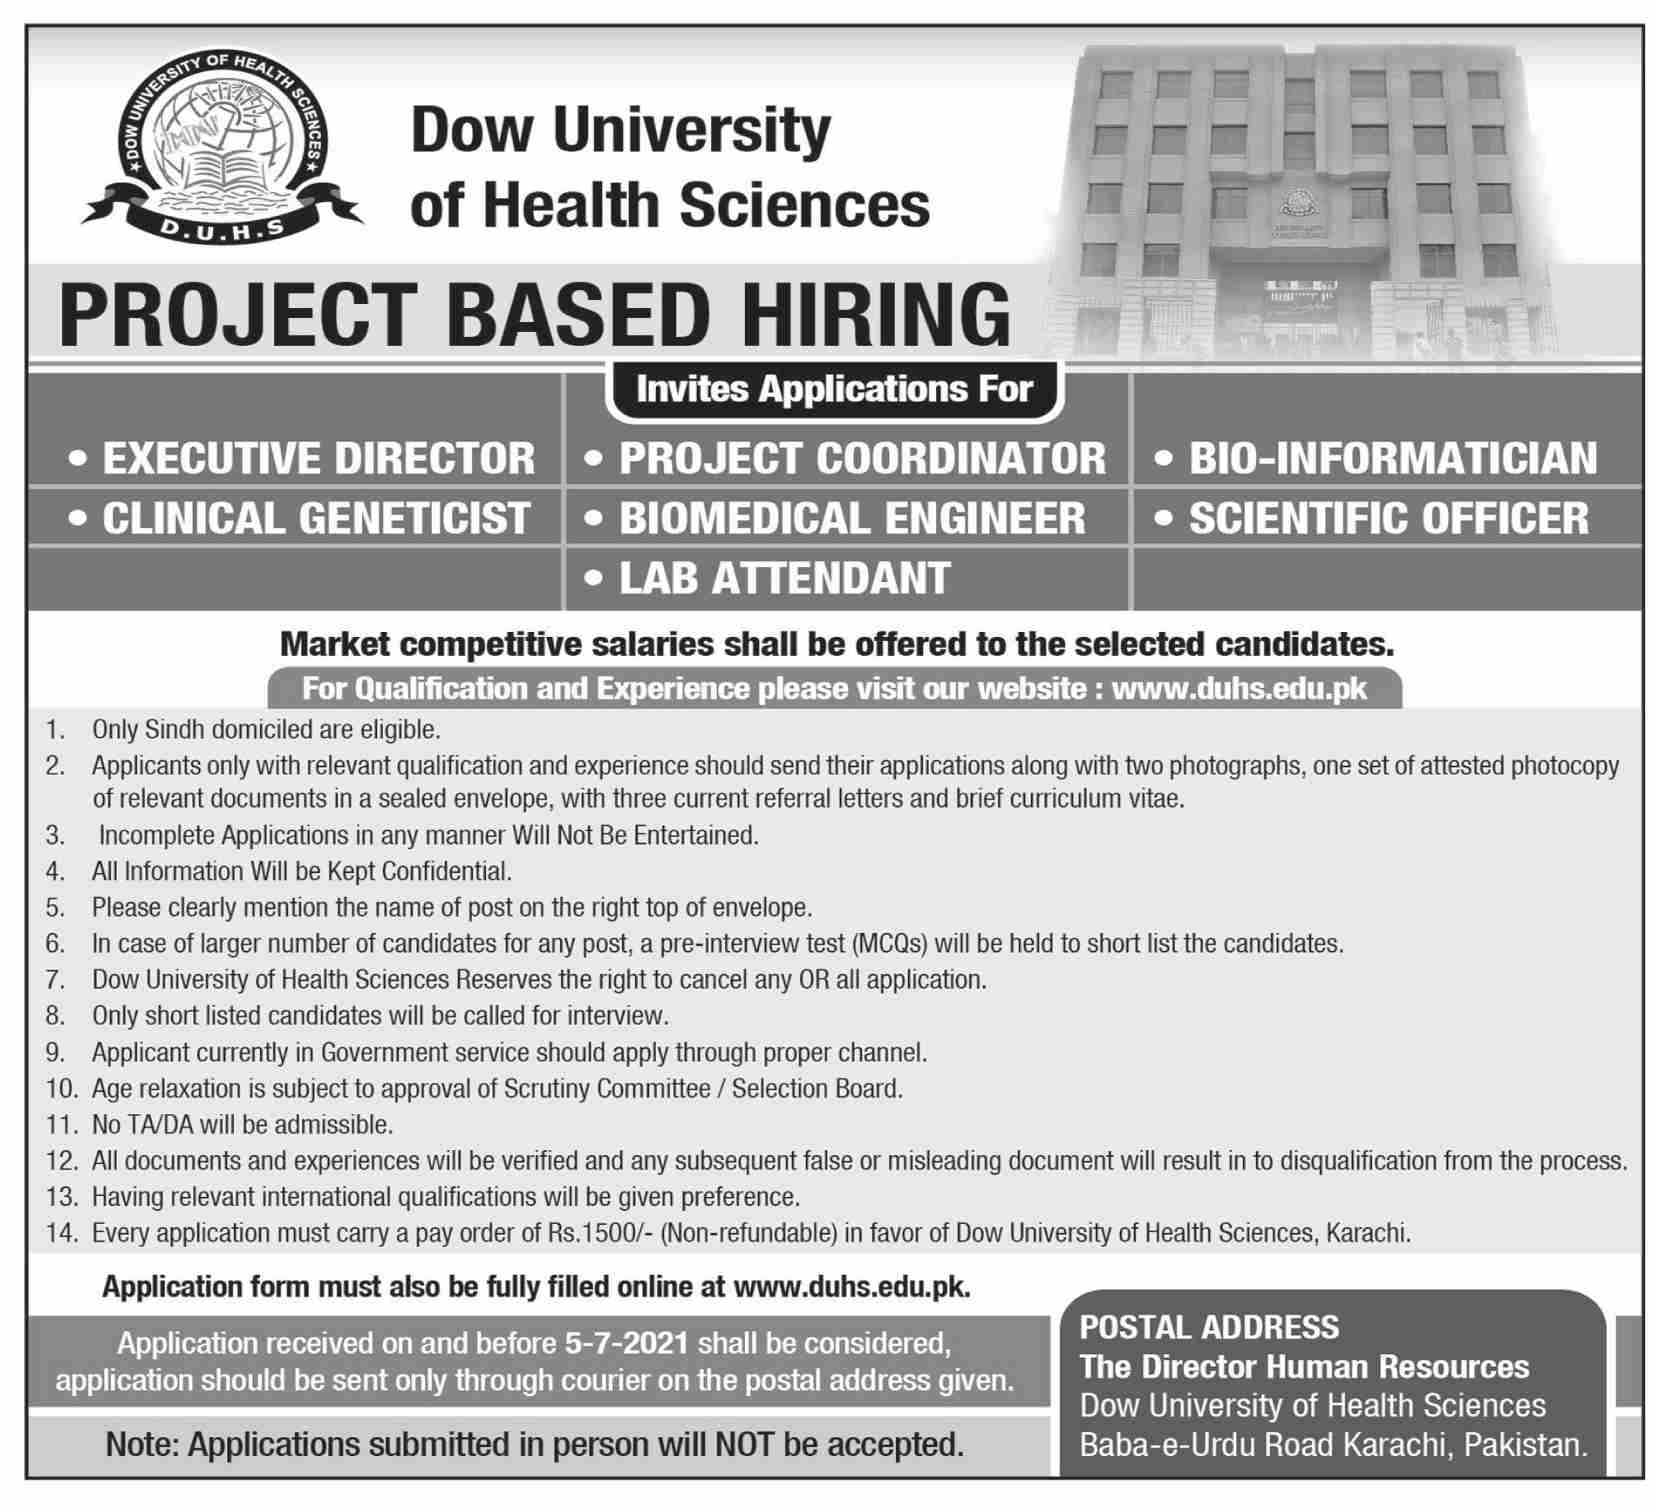 Clinical Geneticist Jobs in Dow University of Health Sciences 2021 in Karachi.